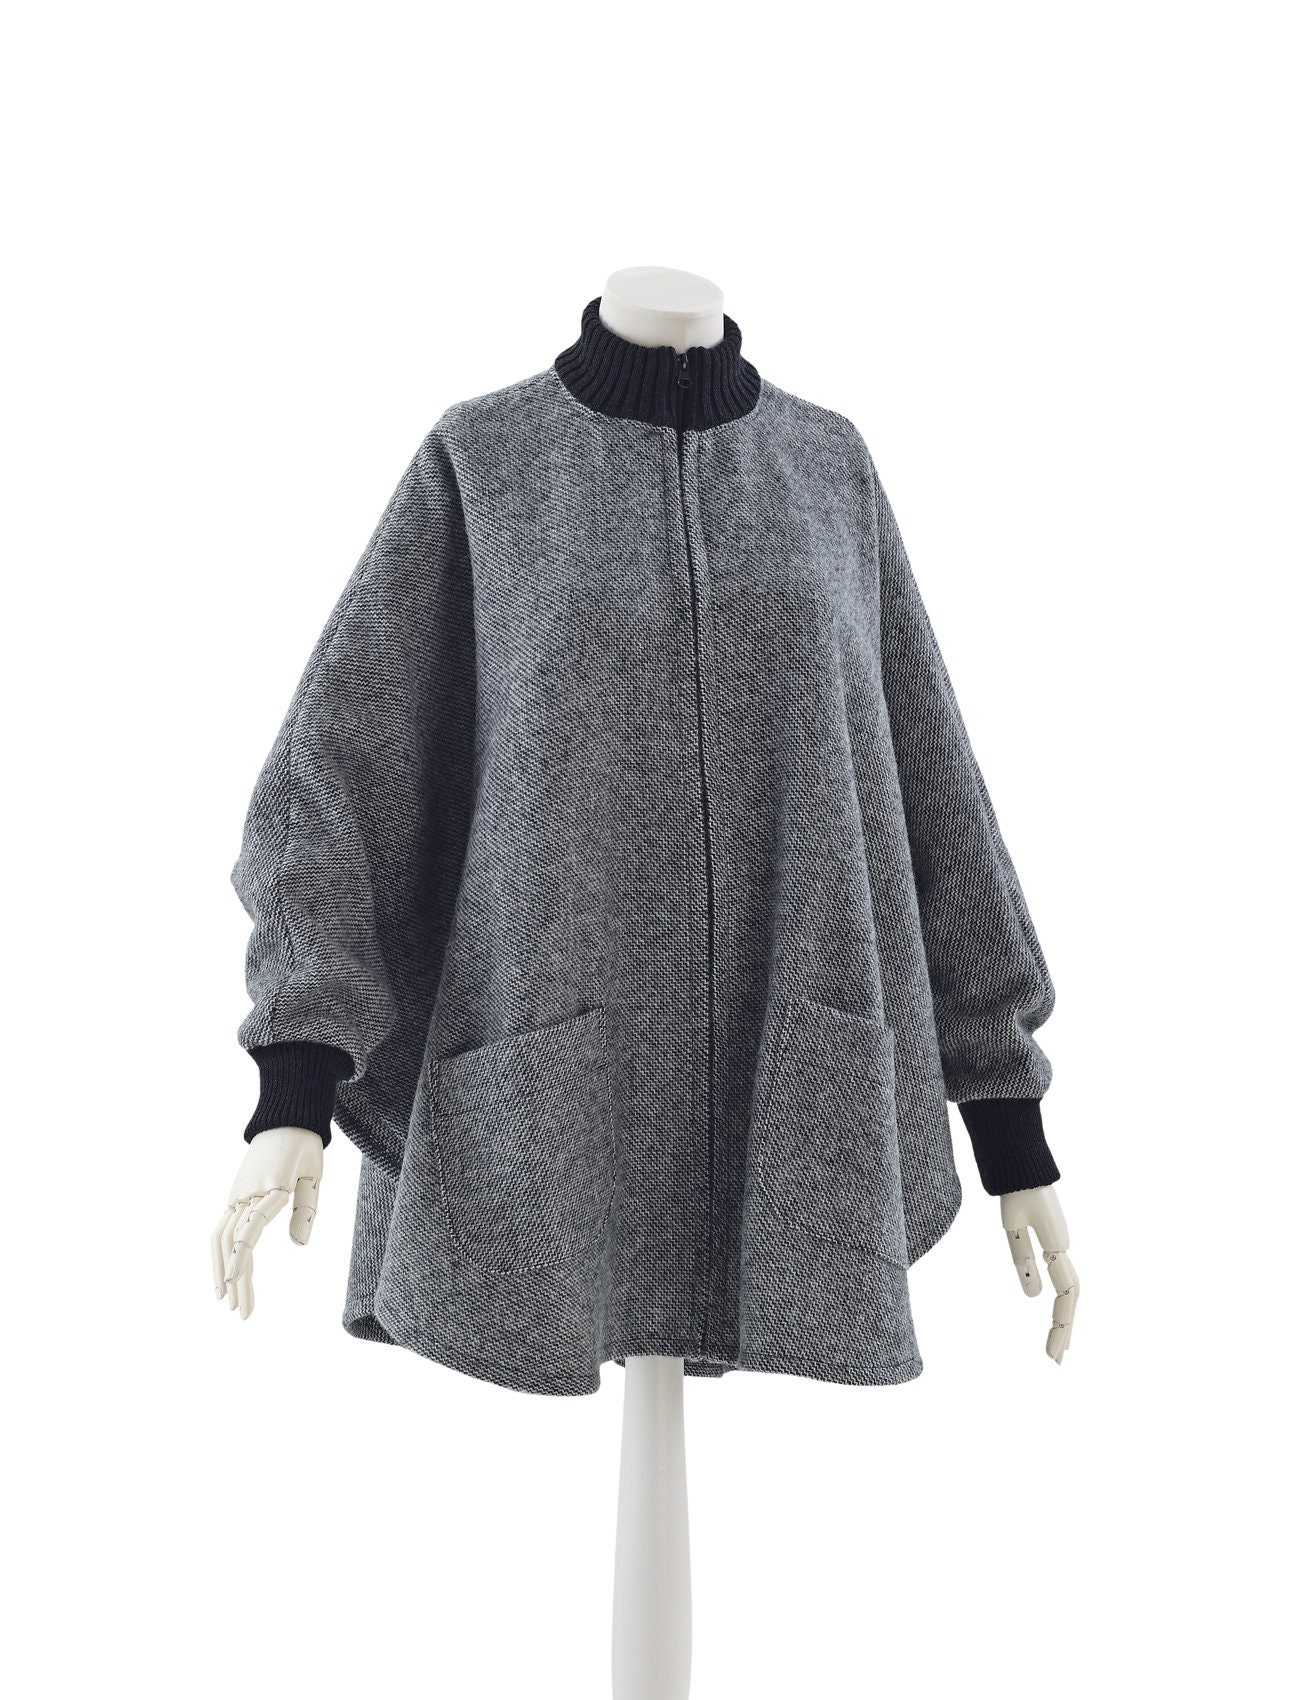 Black Wool Cape Pure Wool Cloak Tweed Soft Merino | Etsy